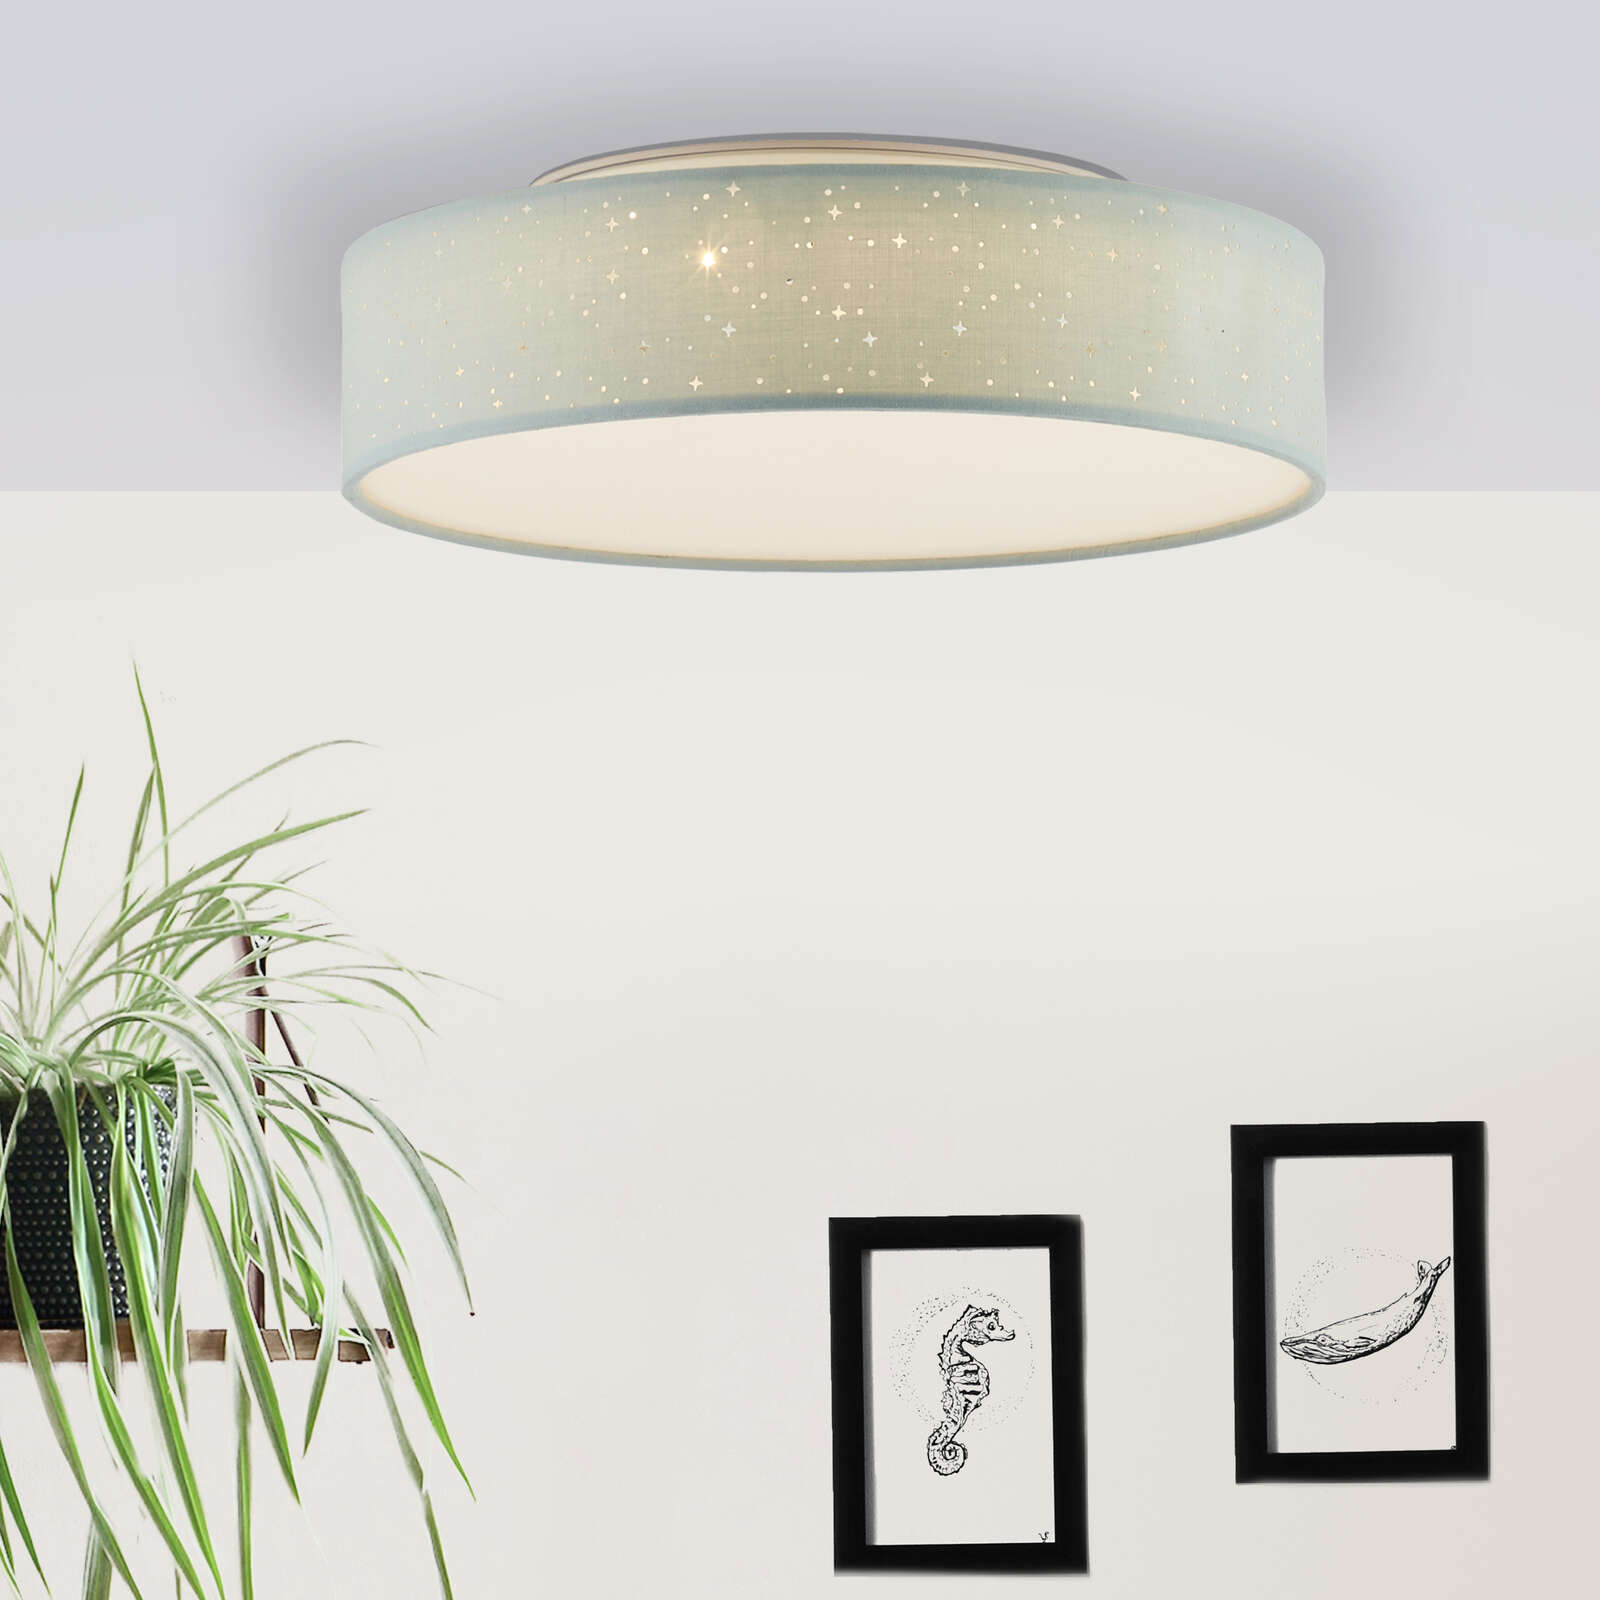             Textiele plafondlamp - Ava 2 - Groen
        